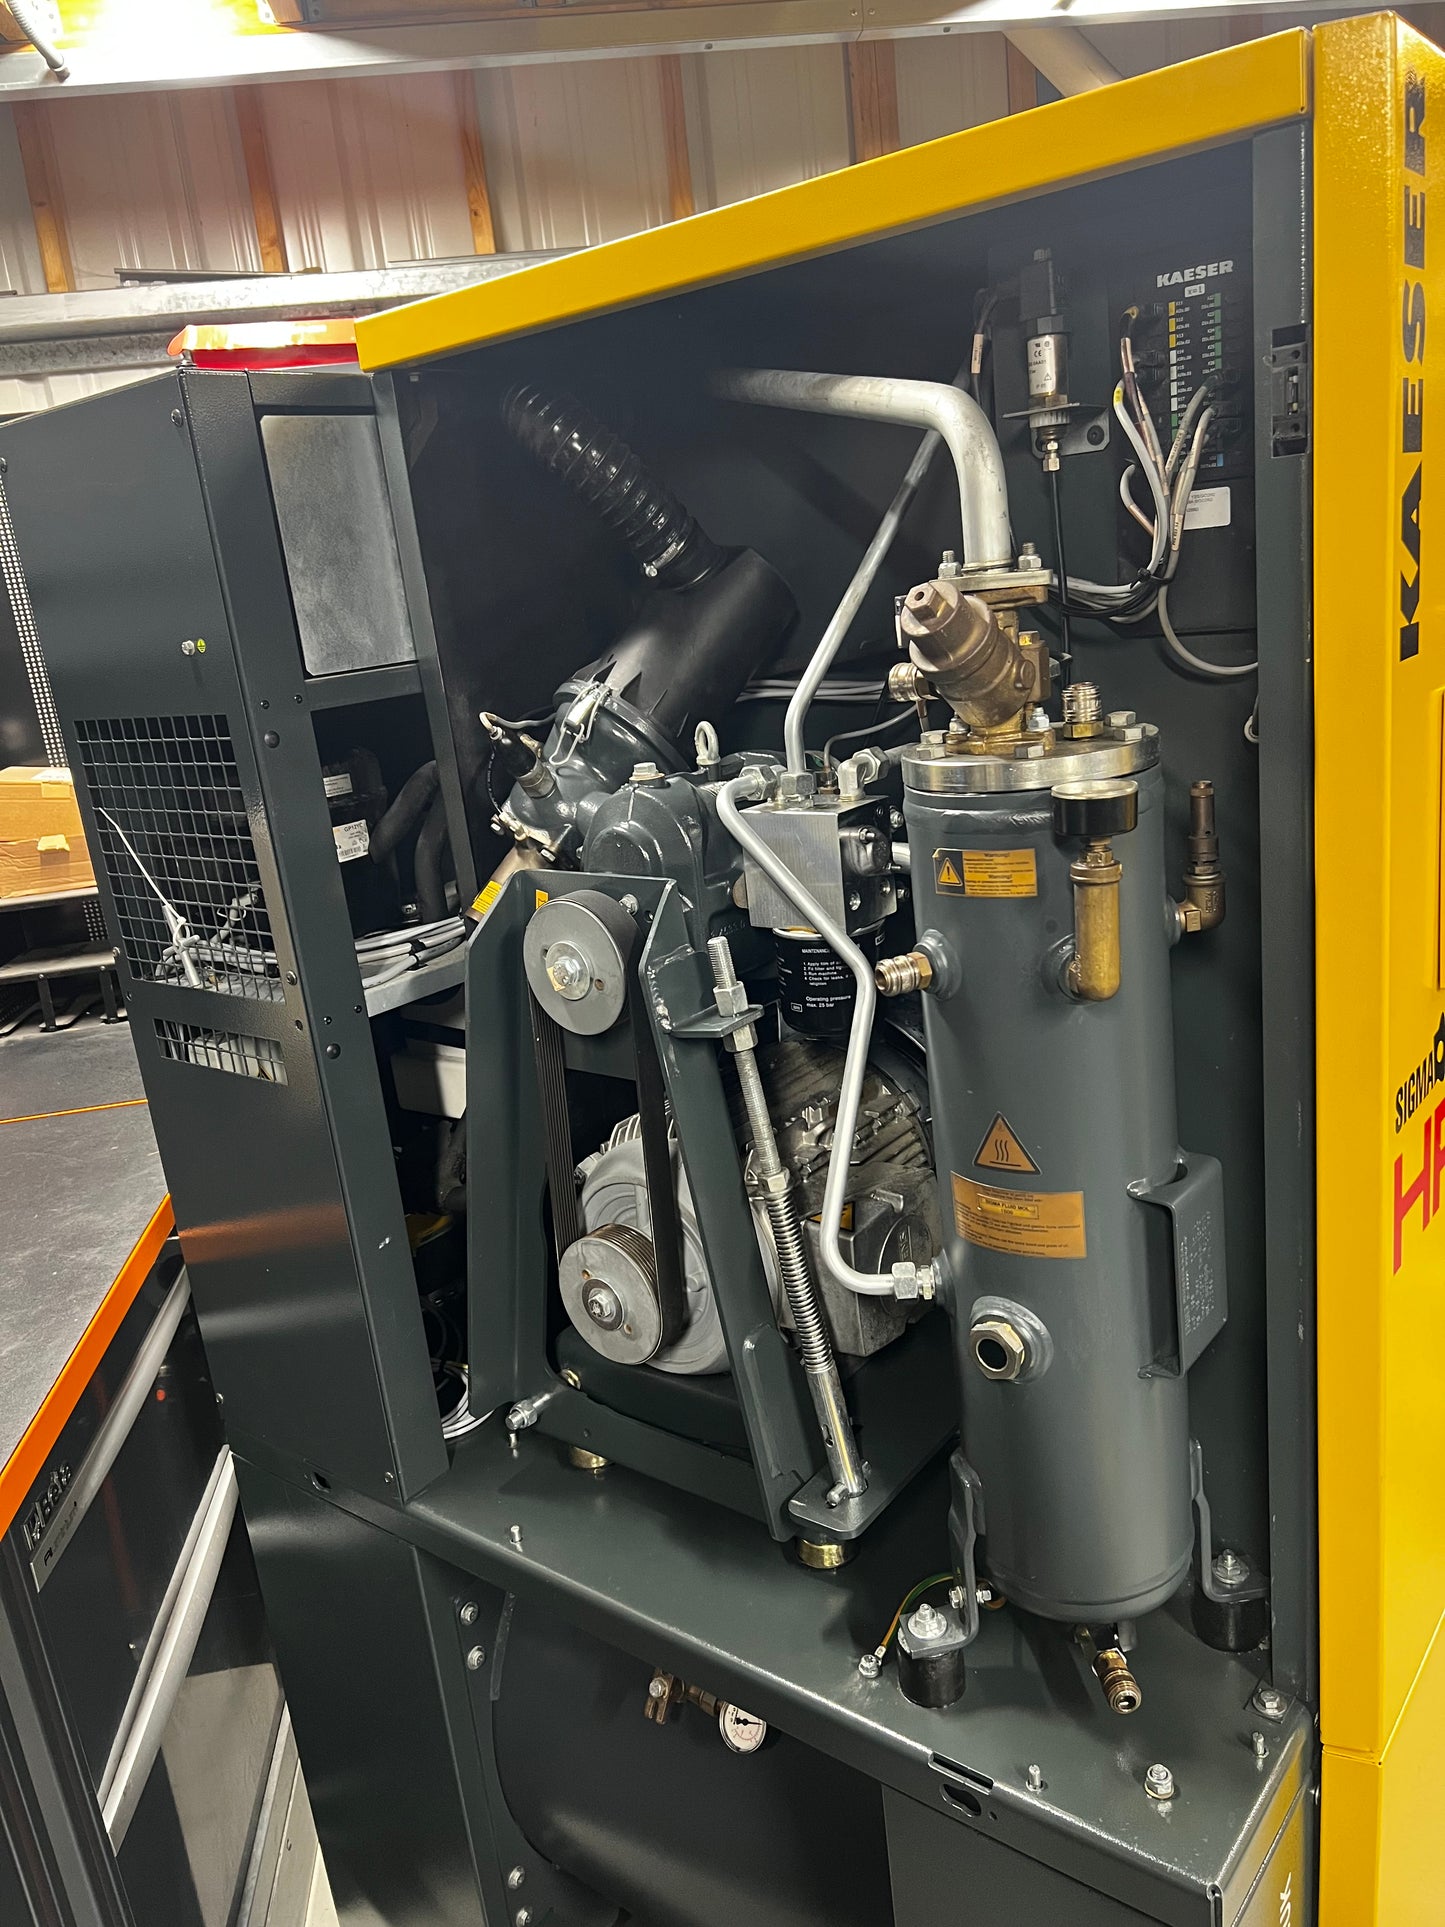 HPC / Kaeser Aircenter 22SFC Variable Speed Drive Rotary Screw Compressor + Dryer